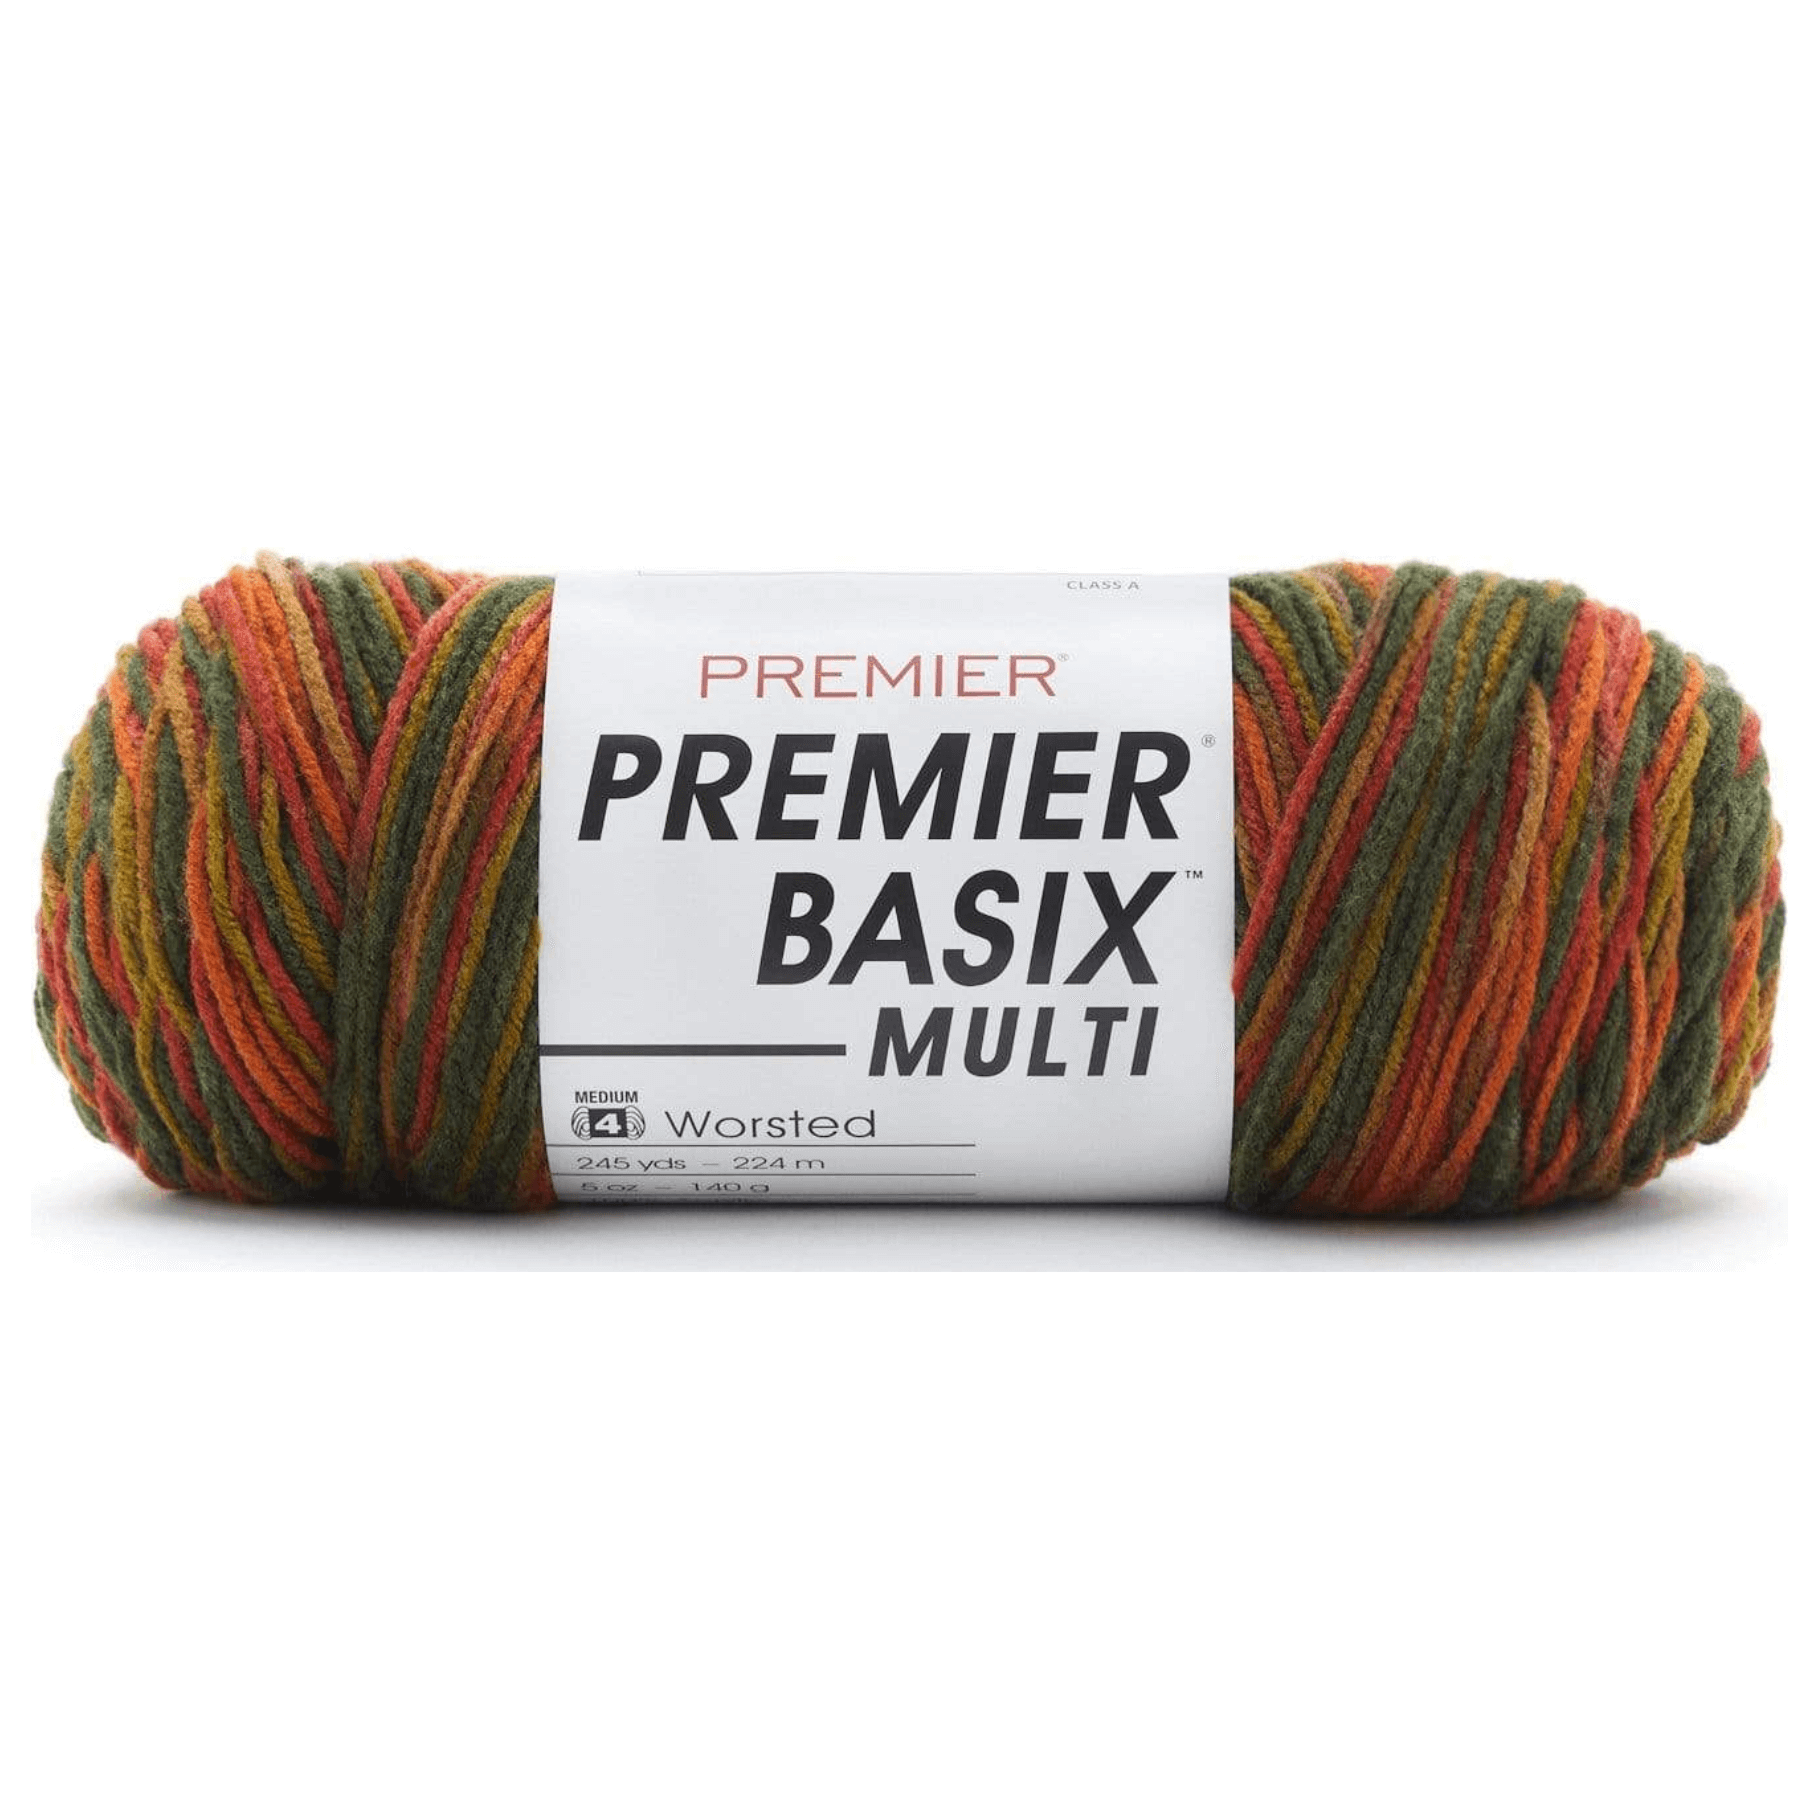 Premier Basix Multi Yarn Sold As A 3 Pack